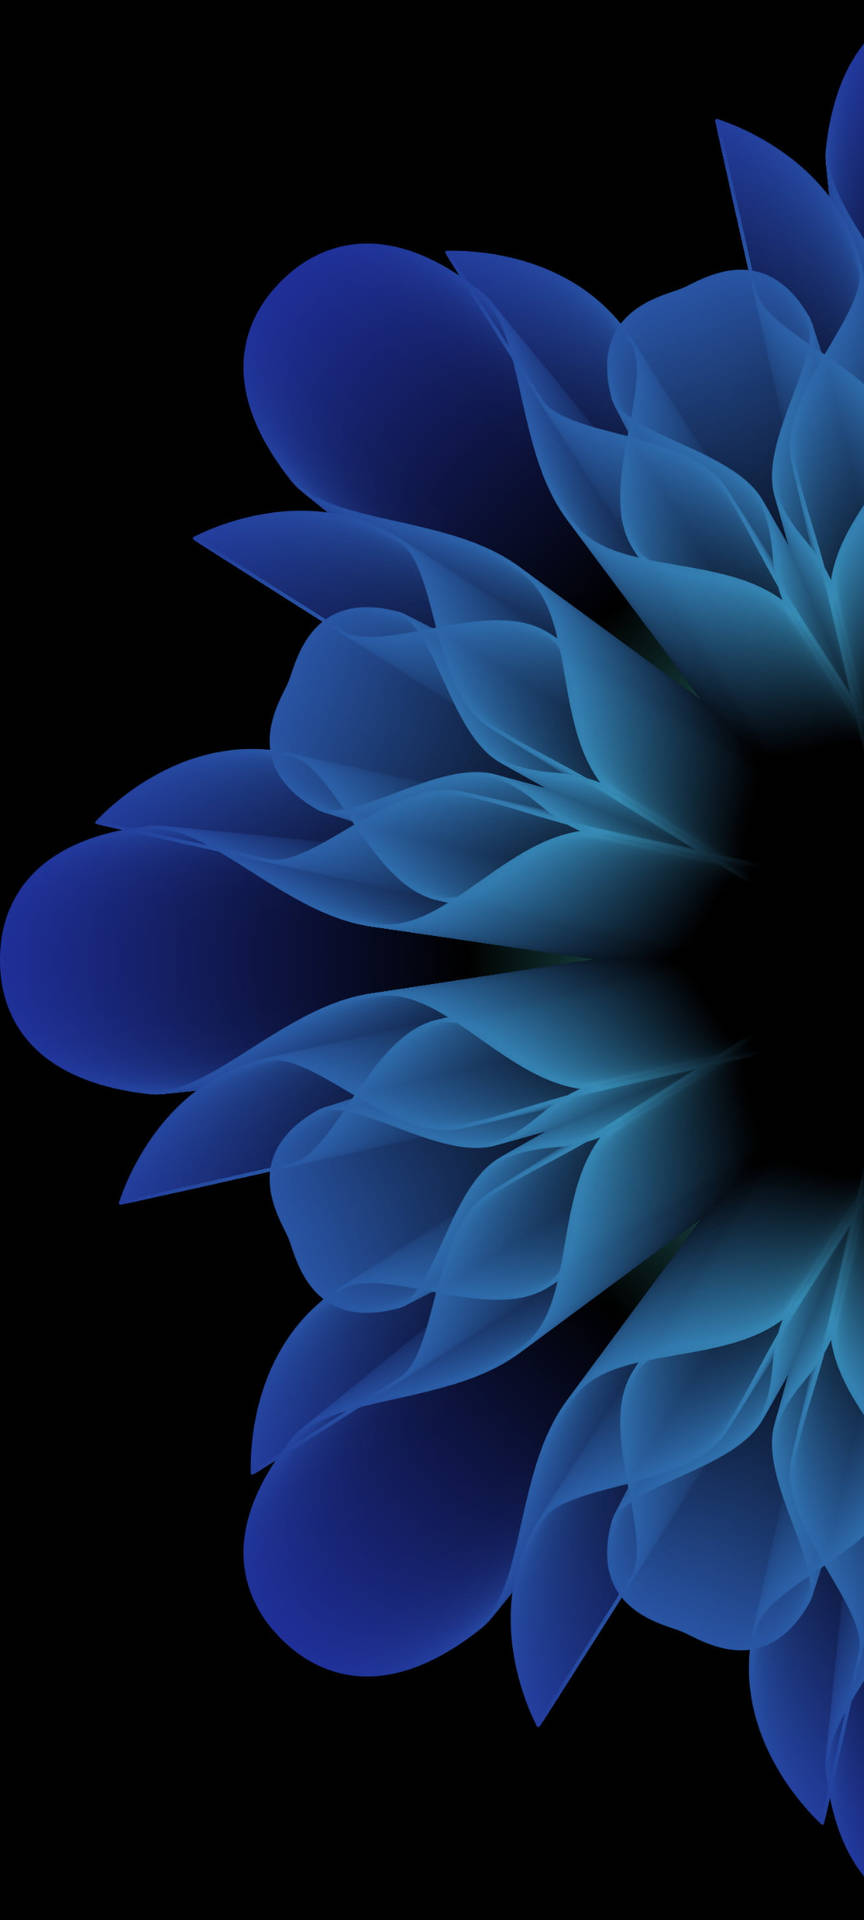 Opaque Blue Flower Original Iphone 7 Background